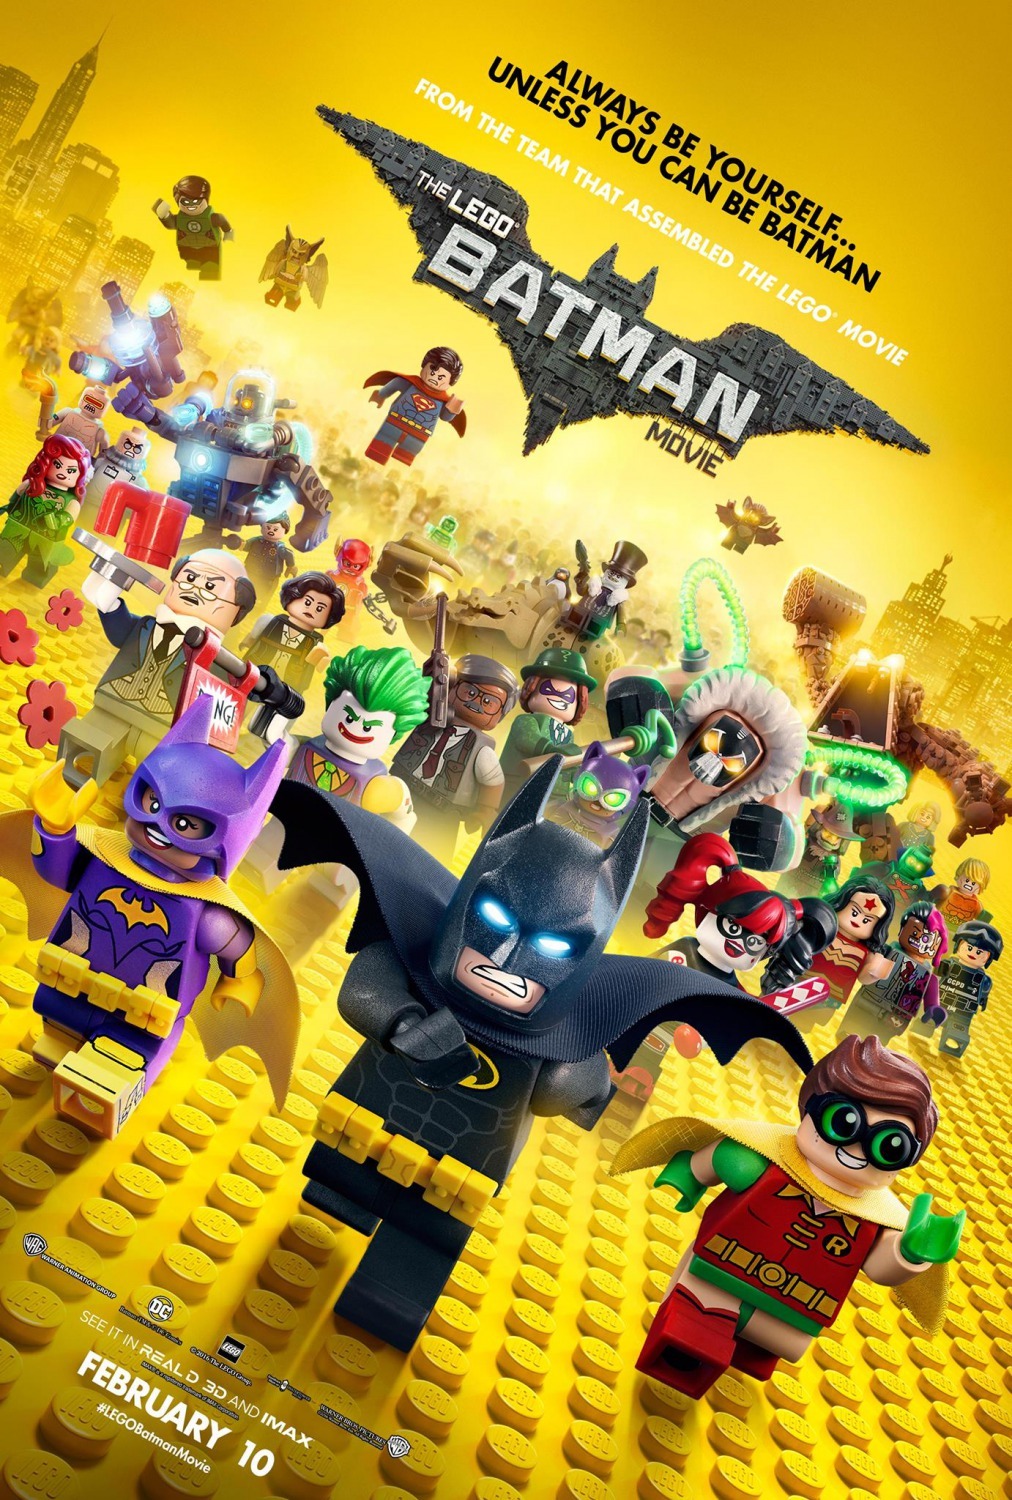 FULL MOVIE: The LEGO Batman Movie (2017)